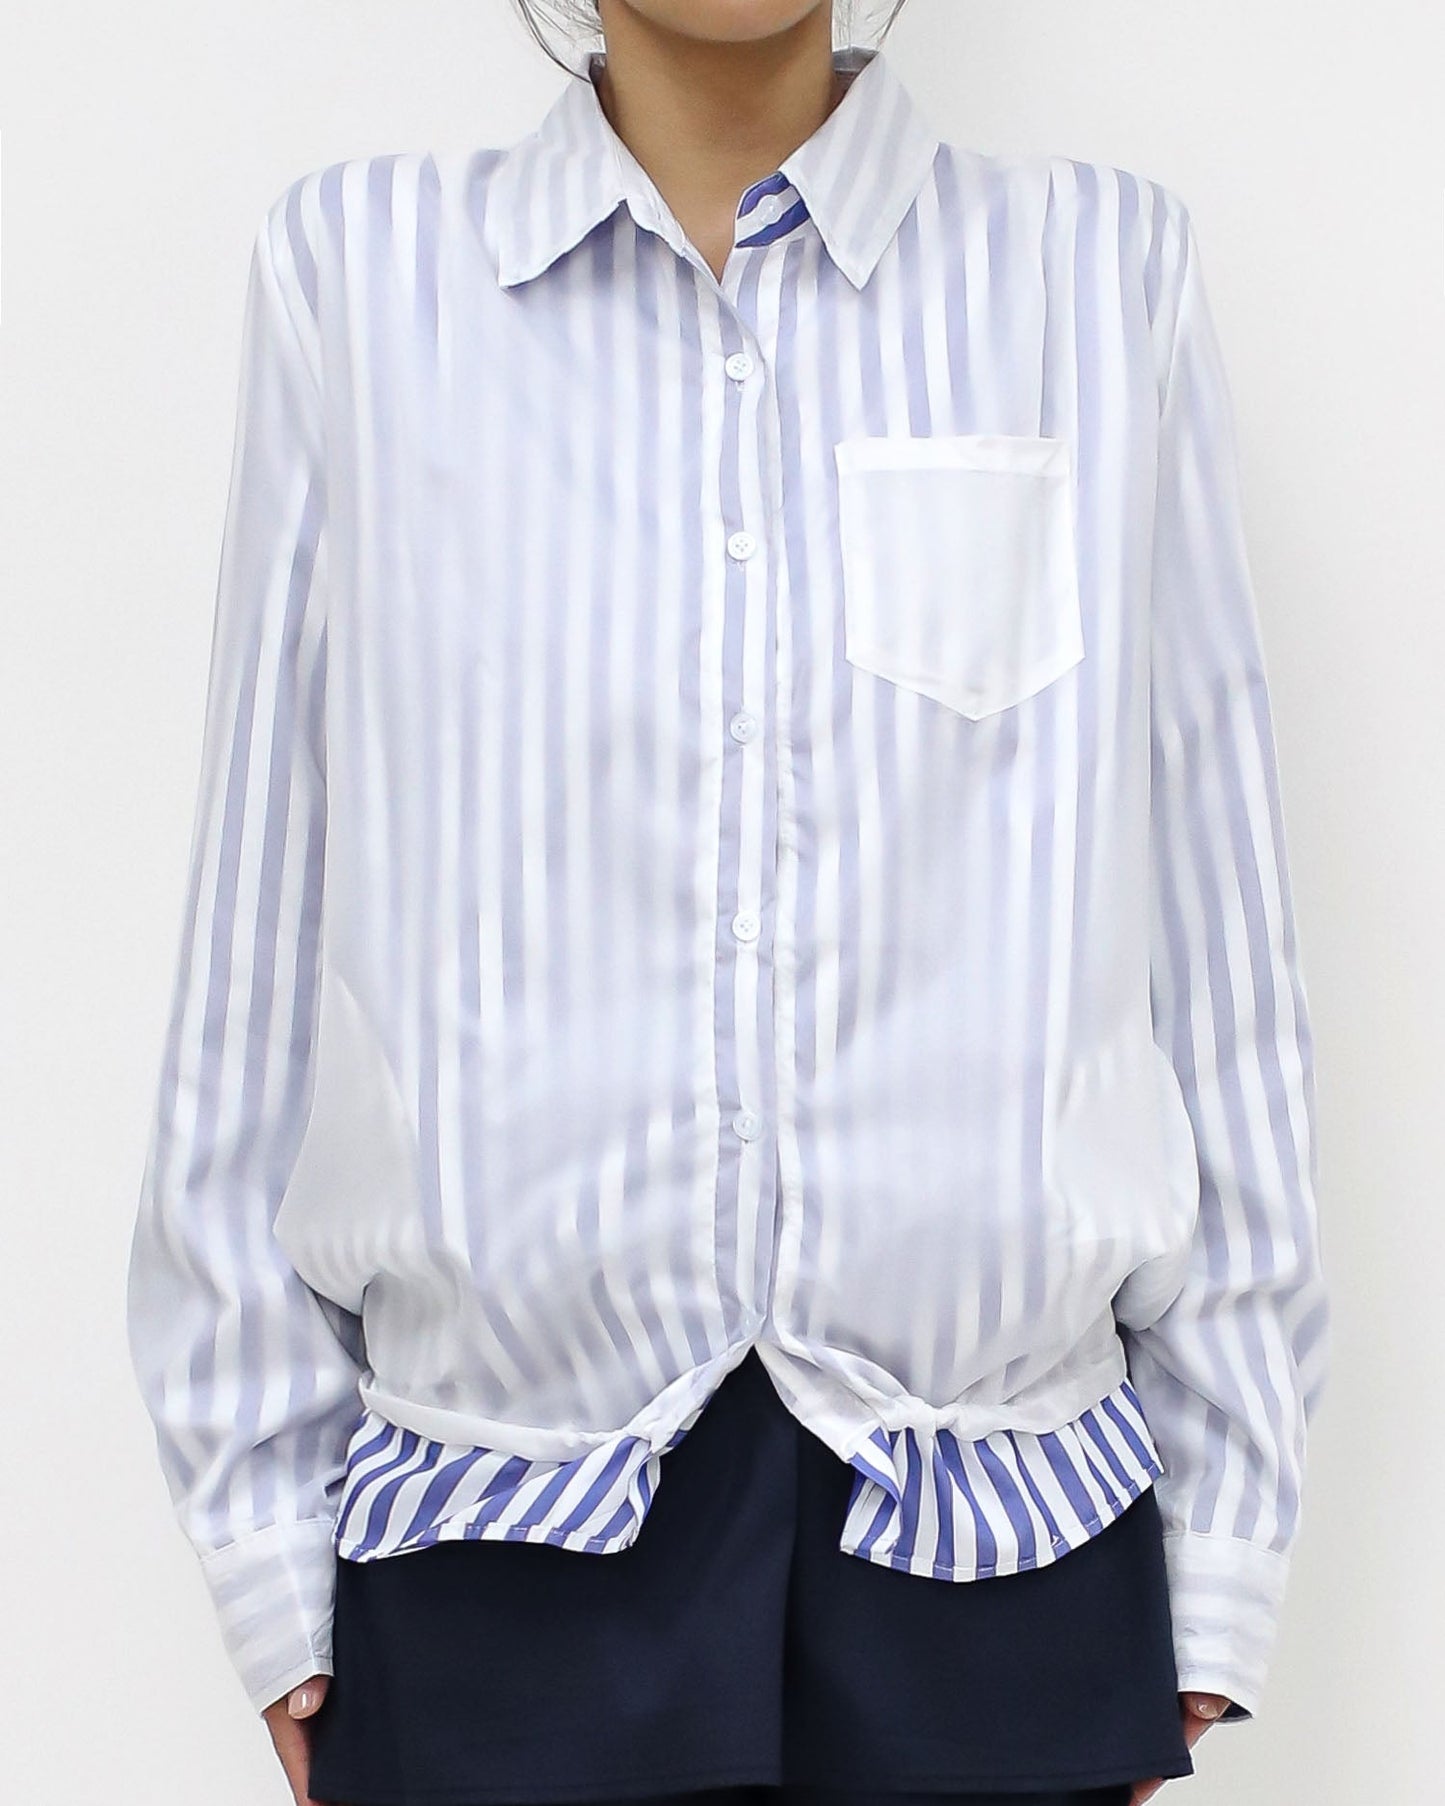 ivory tech & blue stripes shirt layer top *pre-order*